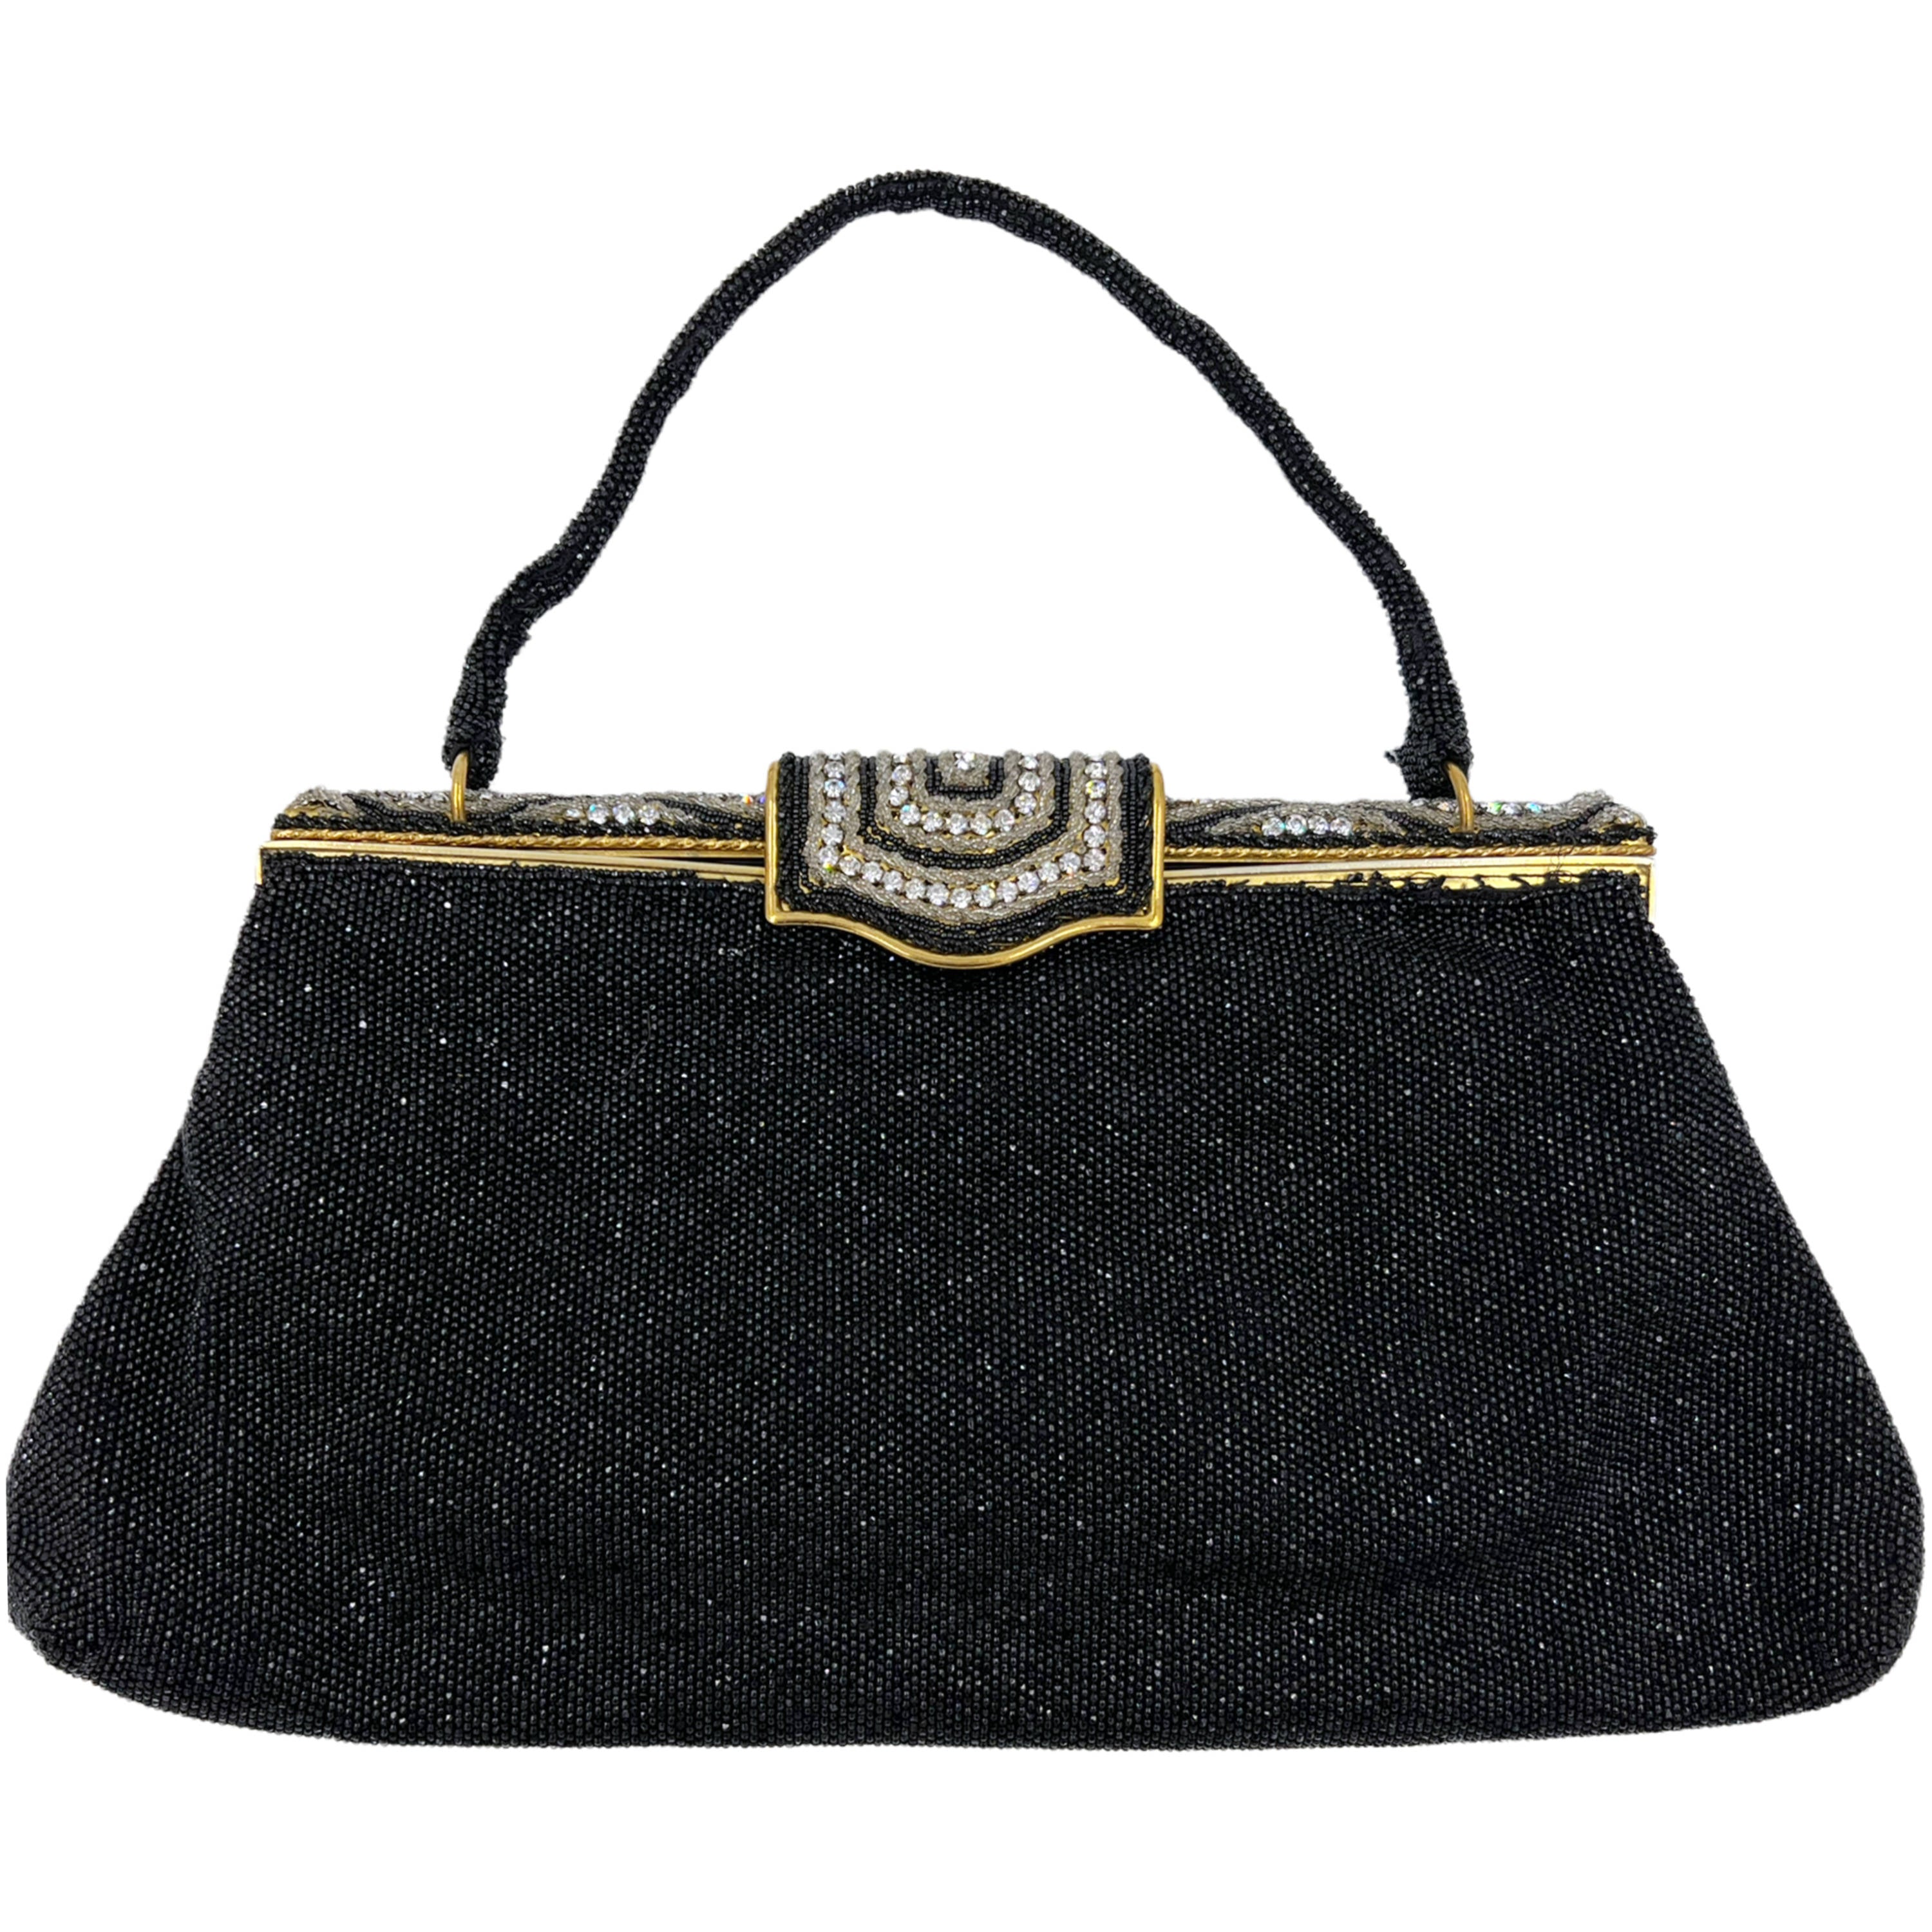 1920s Vintage Beaded Clutch Evening Bags Flapper Handbag Clutch